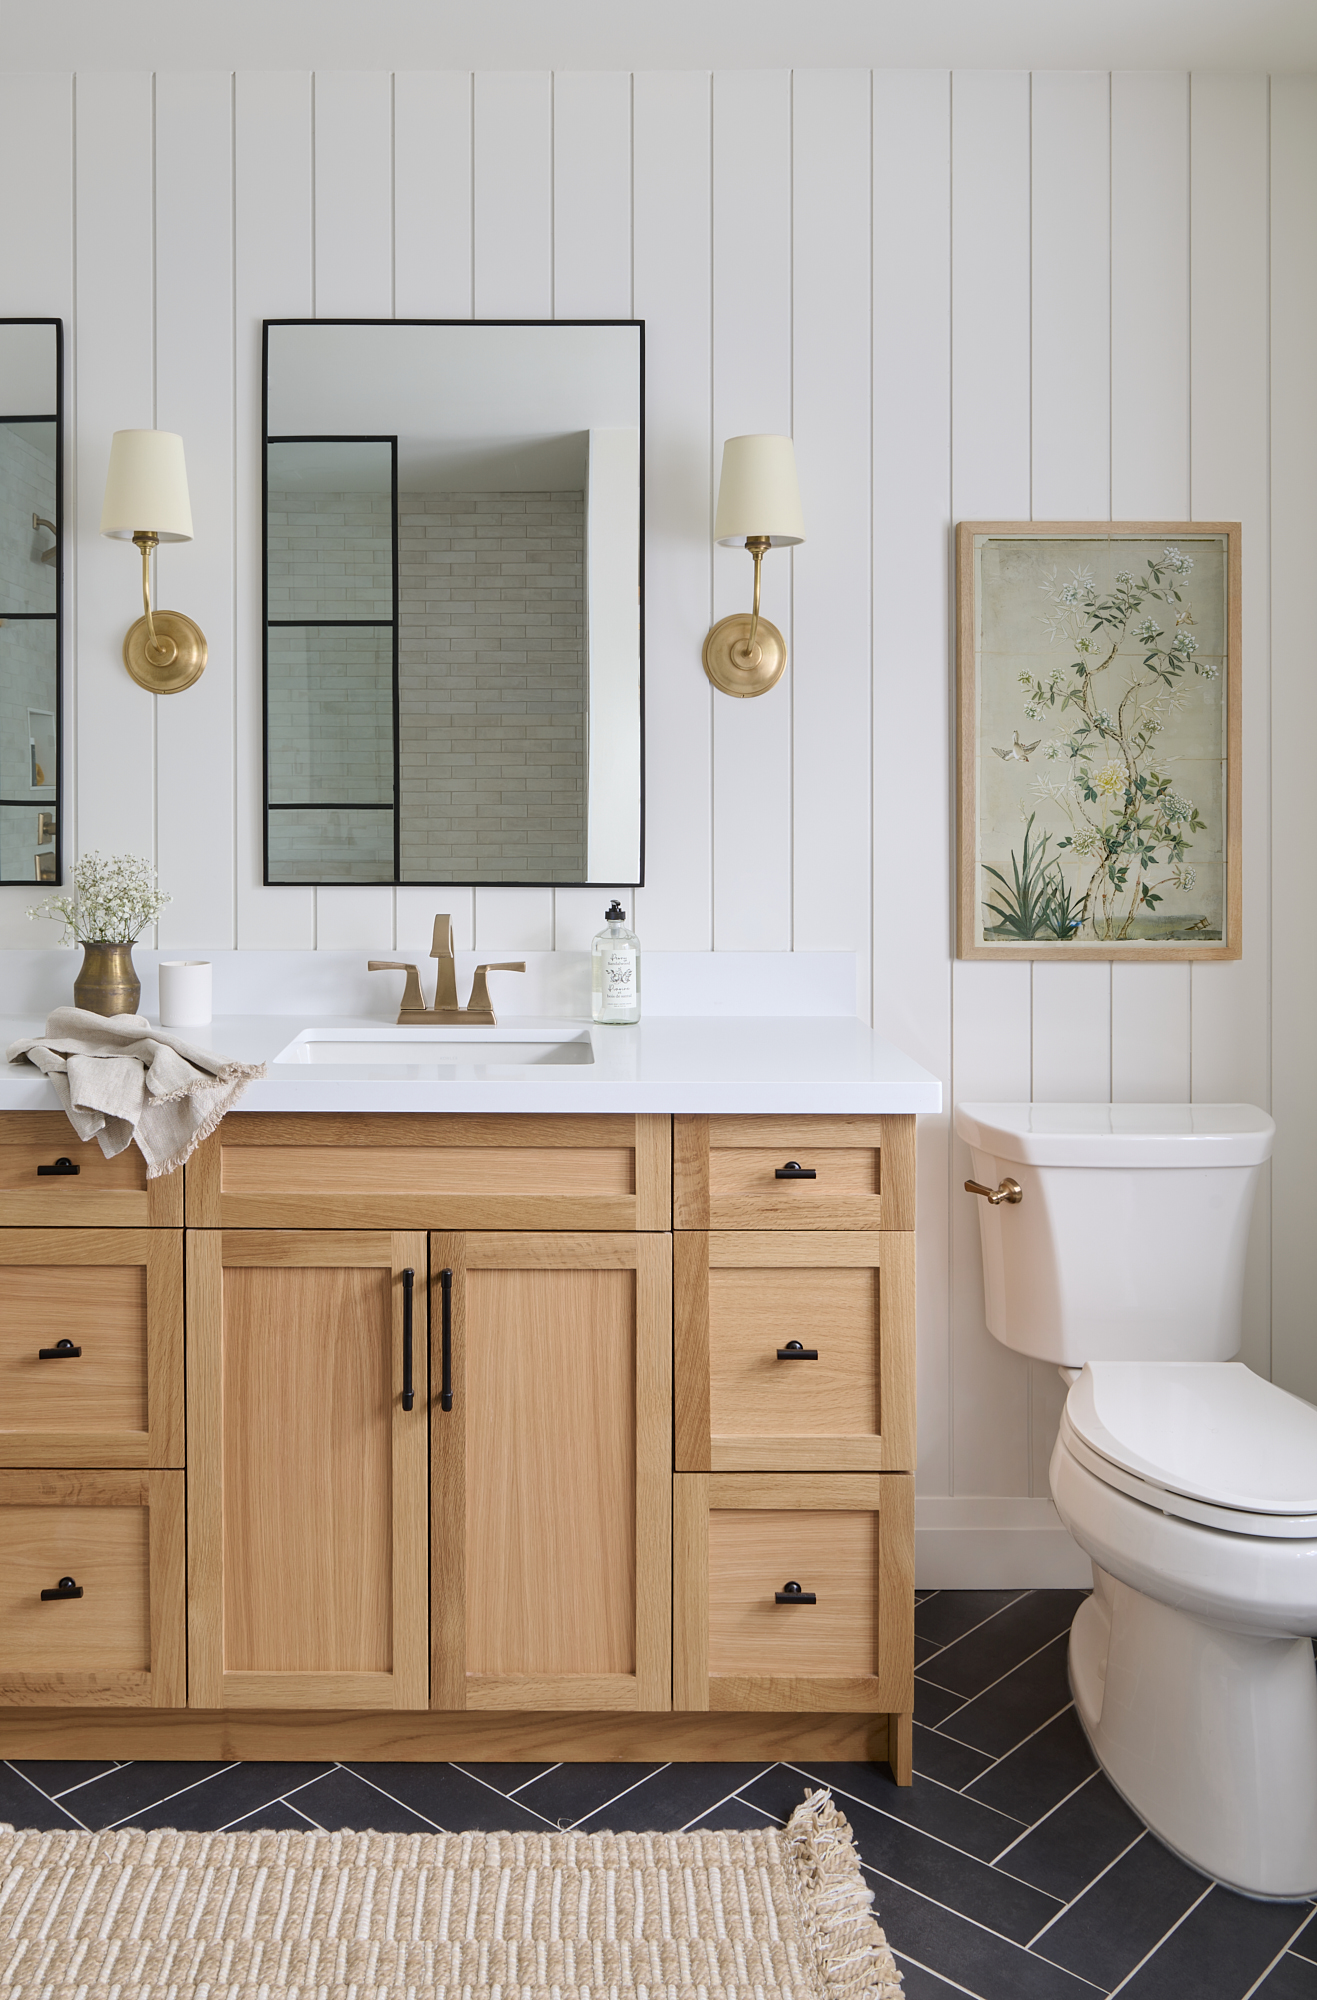 bathroom interior designed with oak wood vanity, nickel gap wall detail, gold plumbing fixtures and decorative sconces